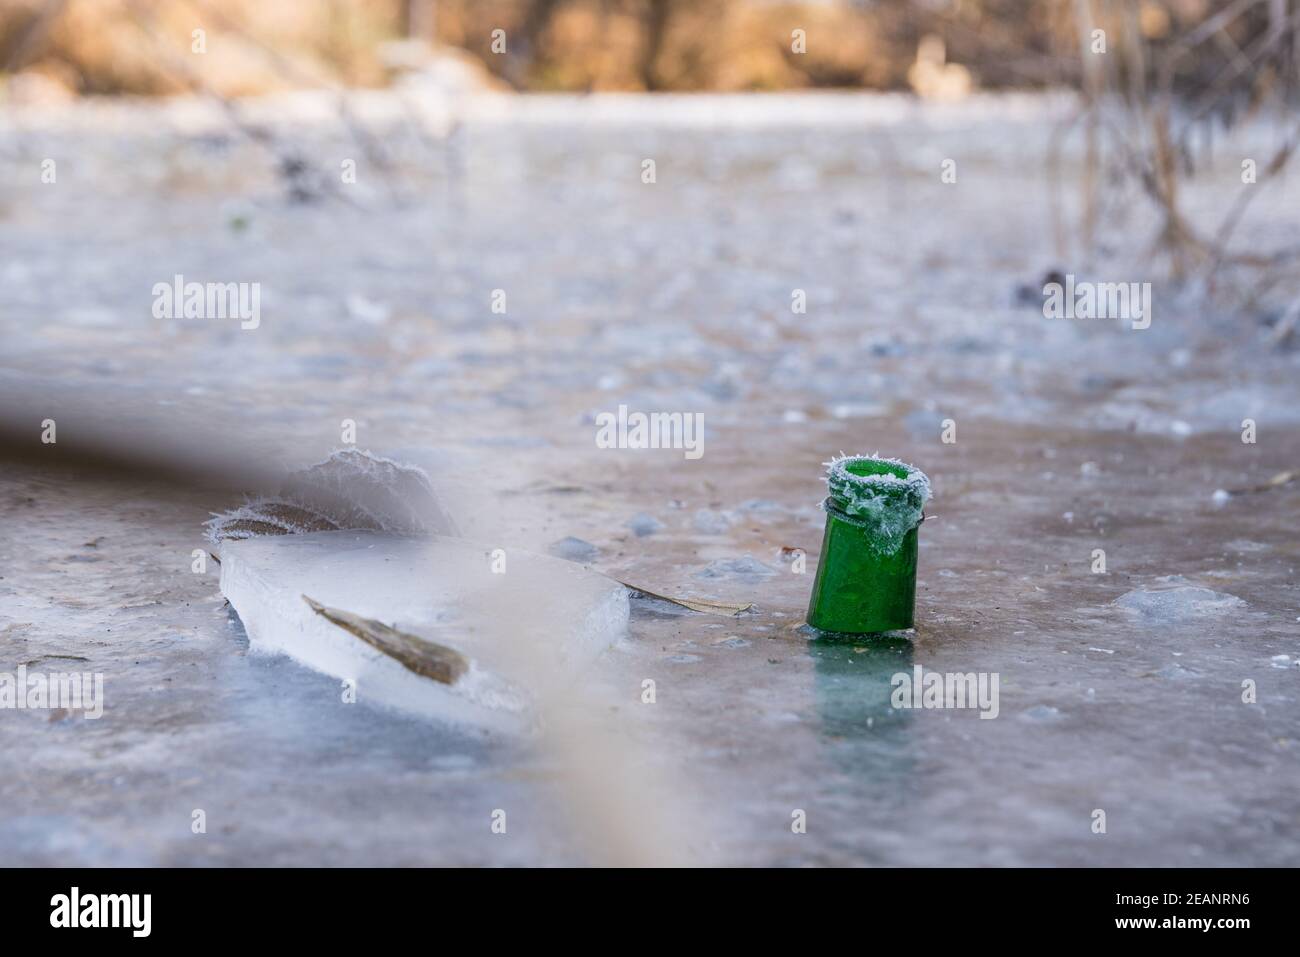 Drinking bottle frozen in ice Stock Photo